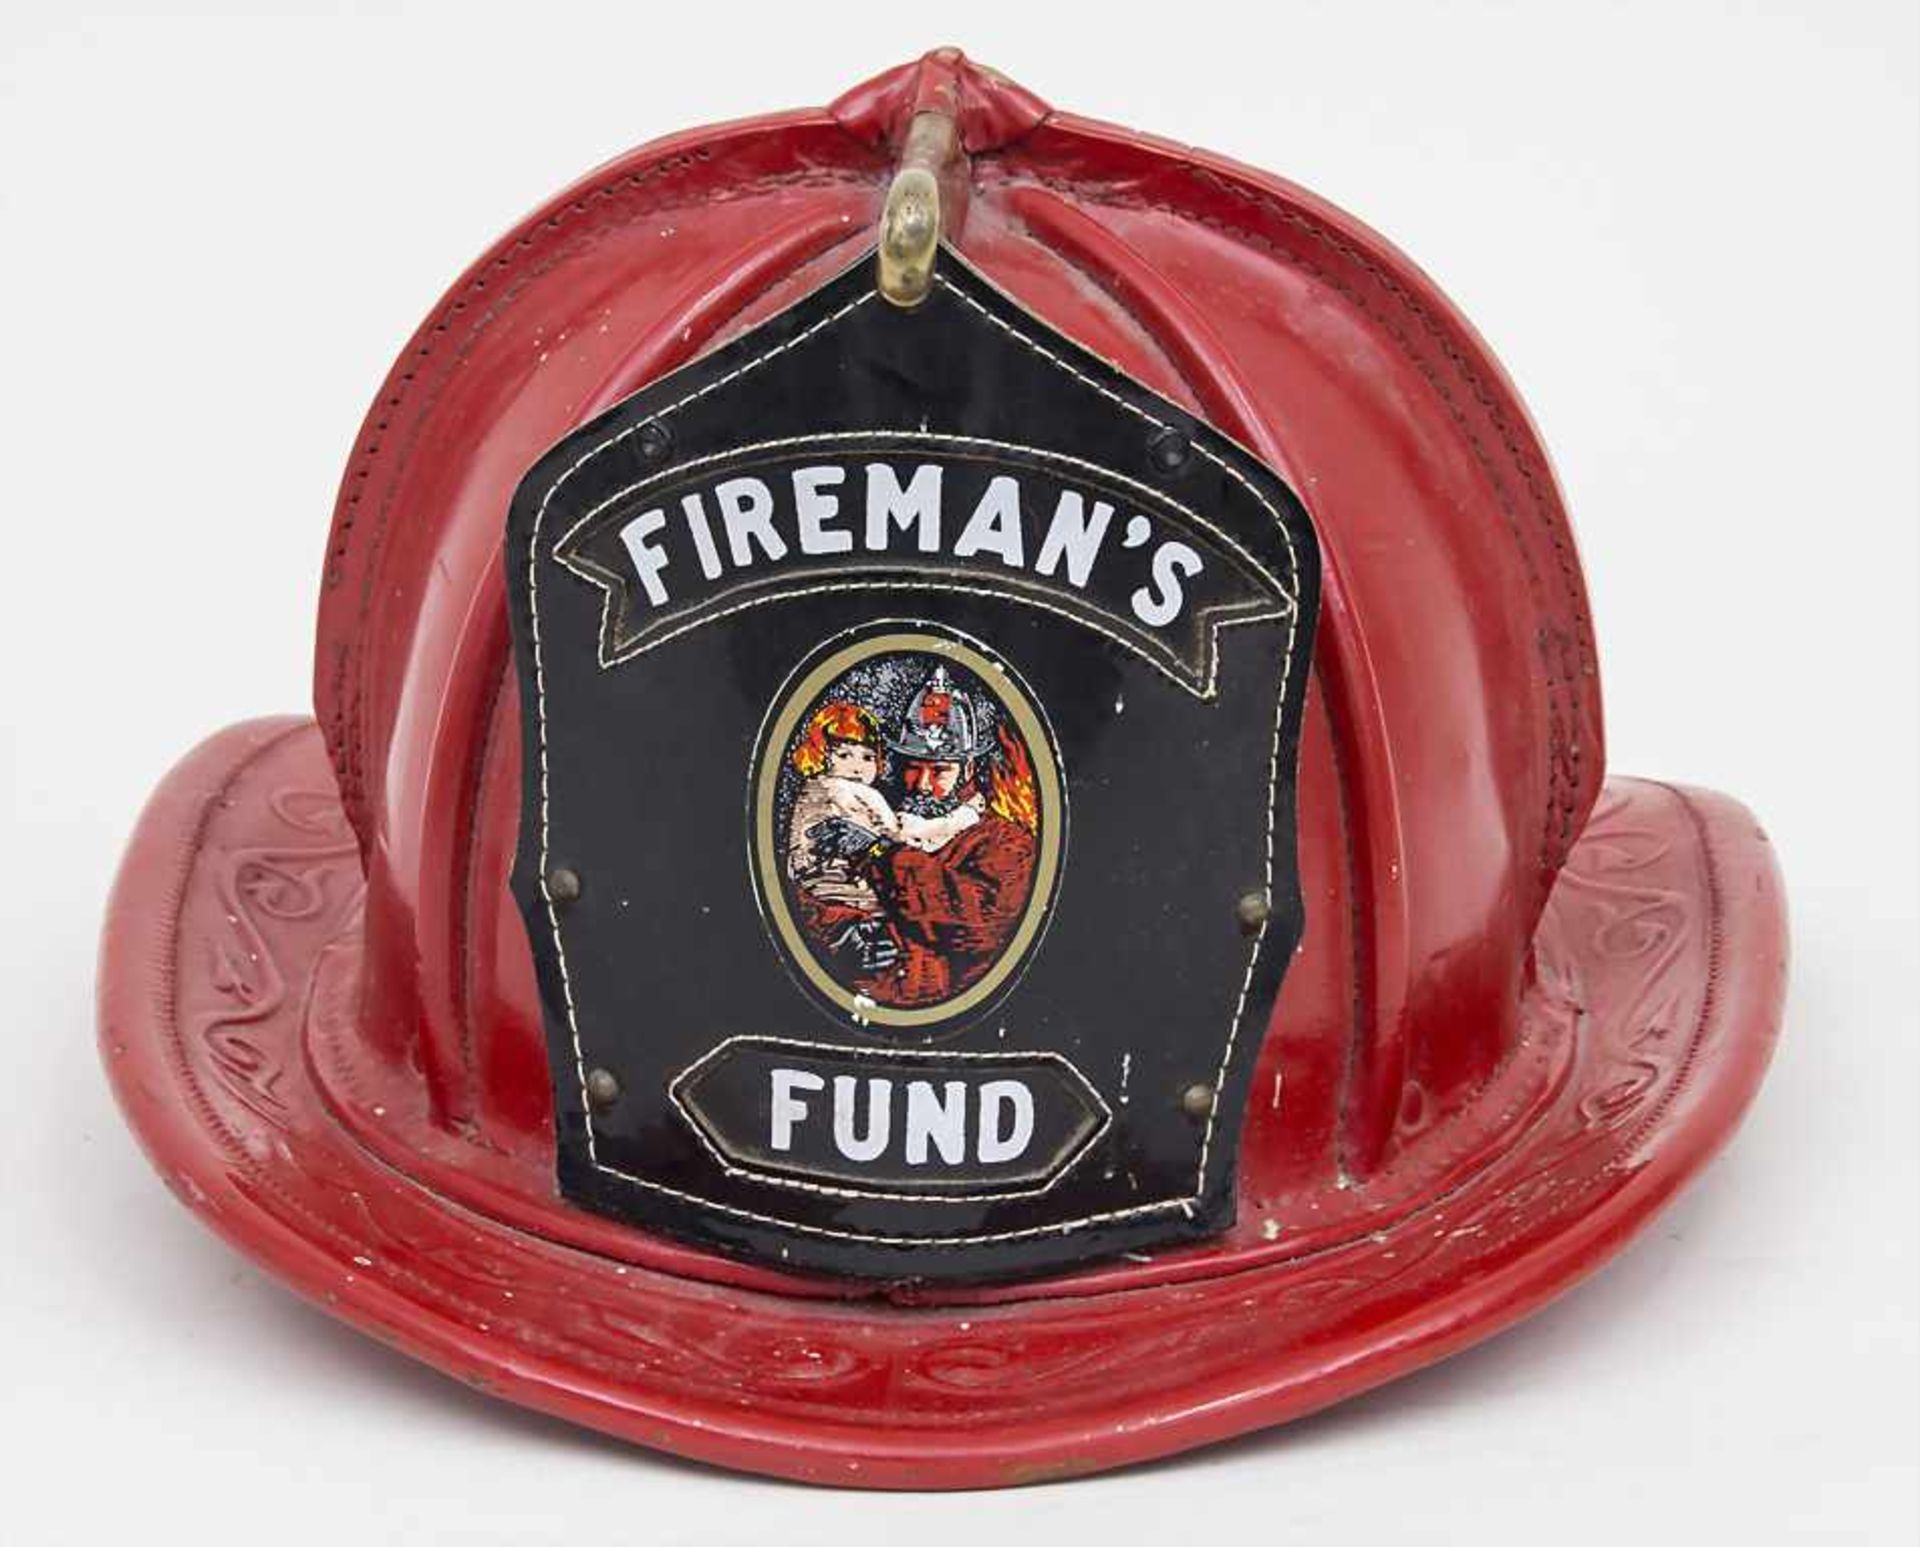 Reklame-Feuerwehrhelm / A promotion firefighter helmet, Cairns & Brothers, USA Material: